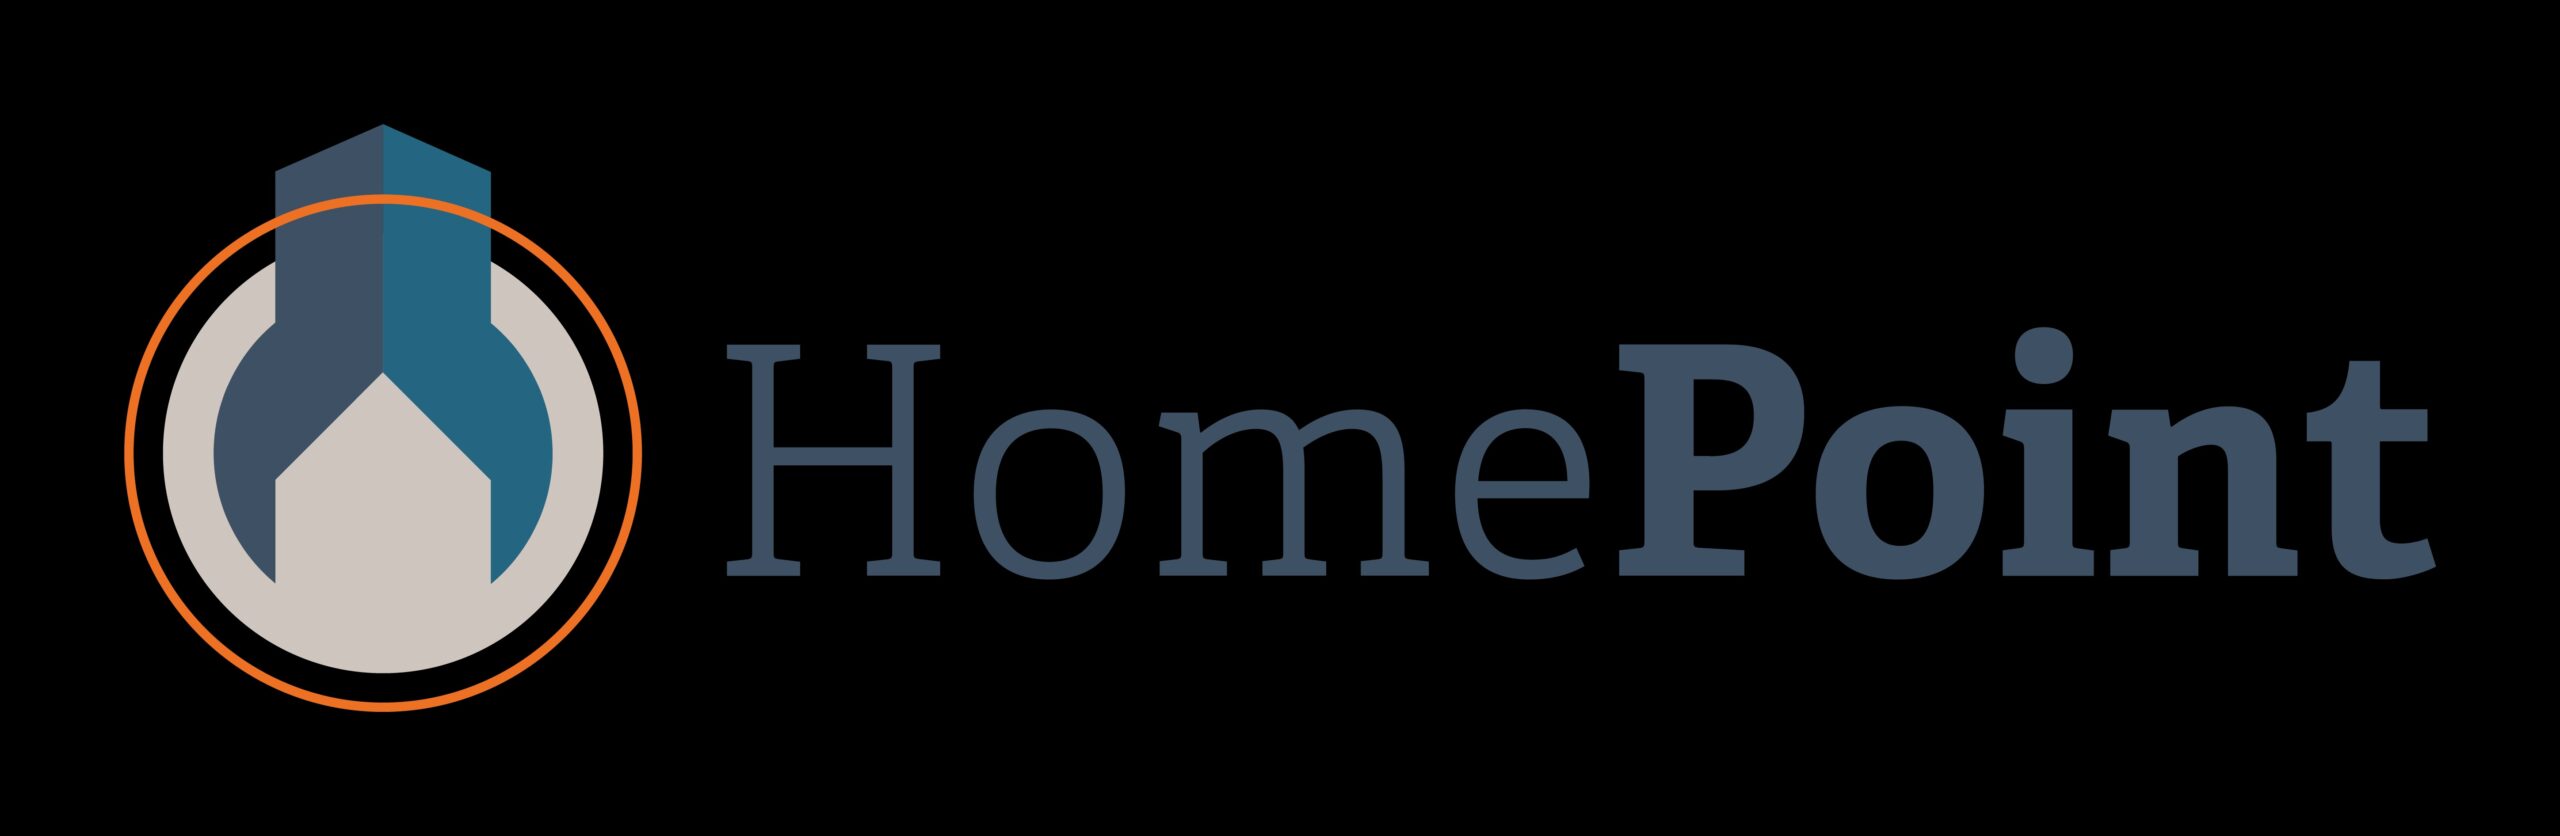 Homepoint - Logo - Web_Horizontal